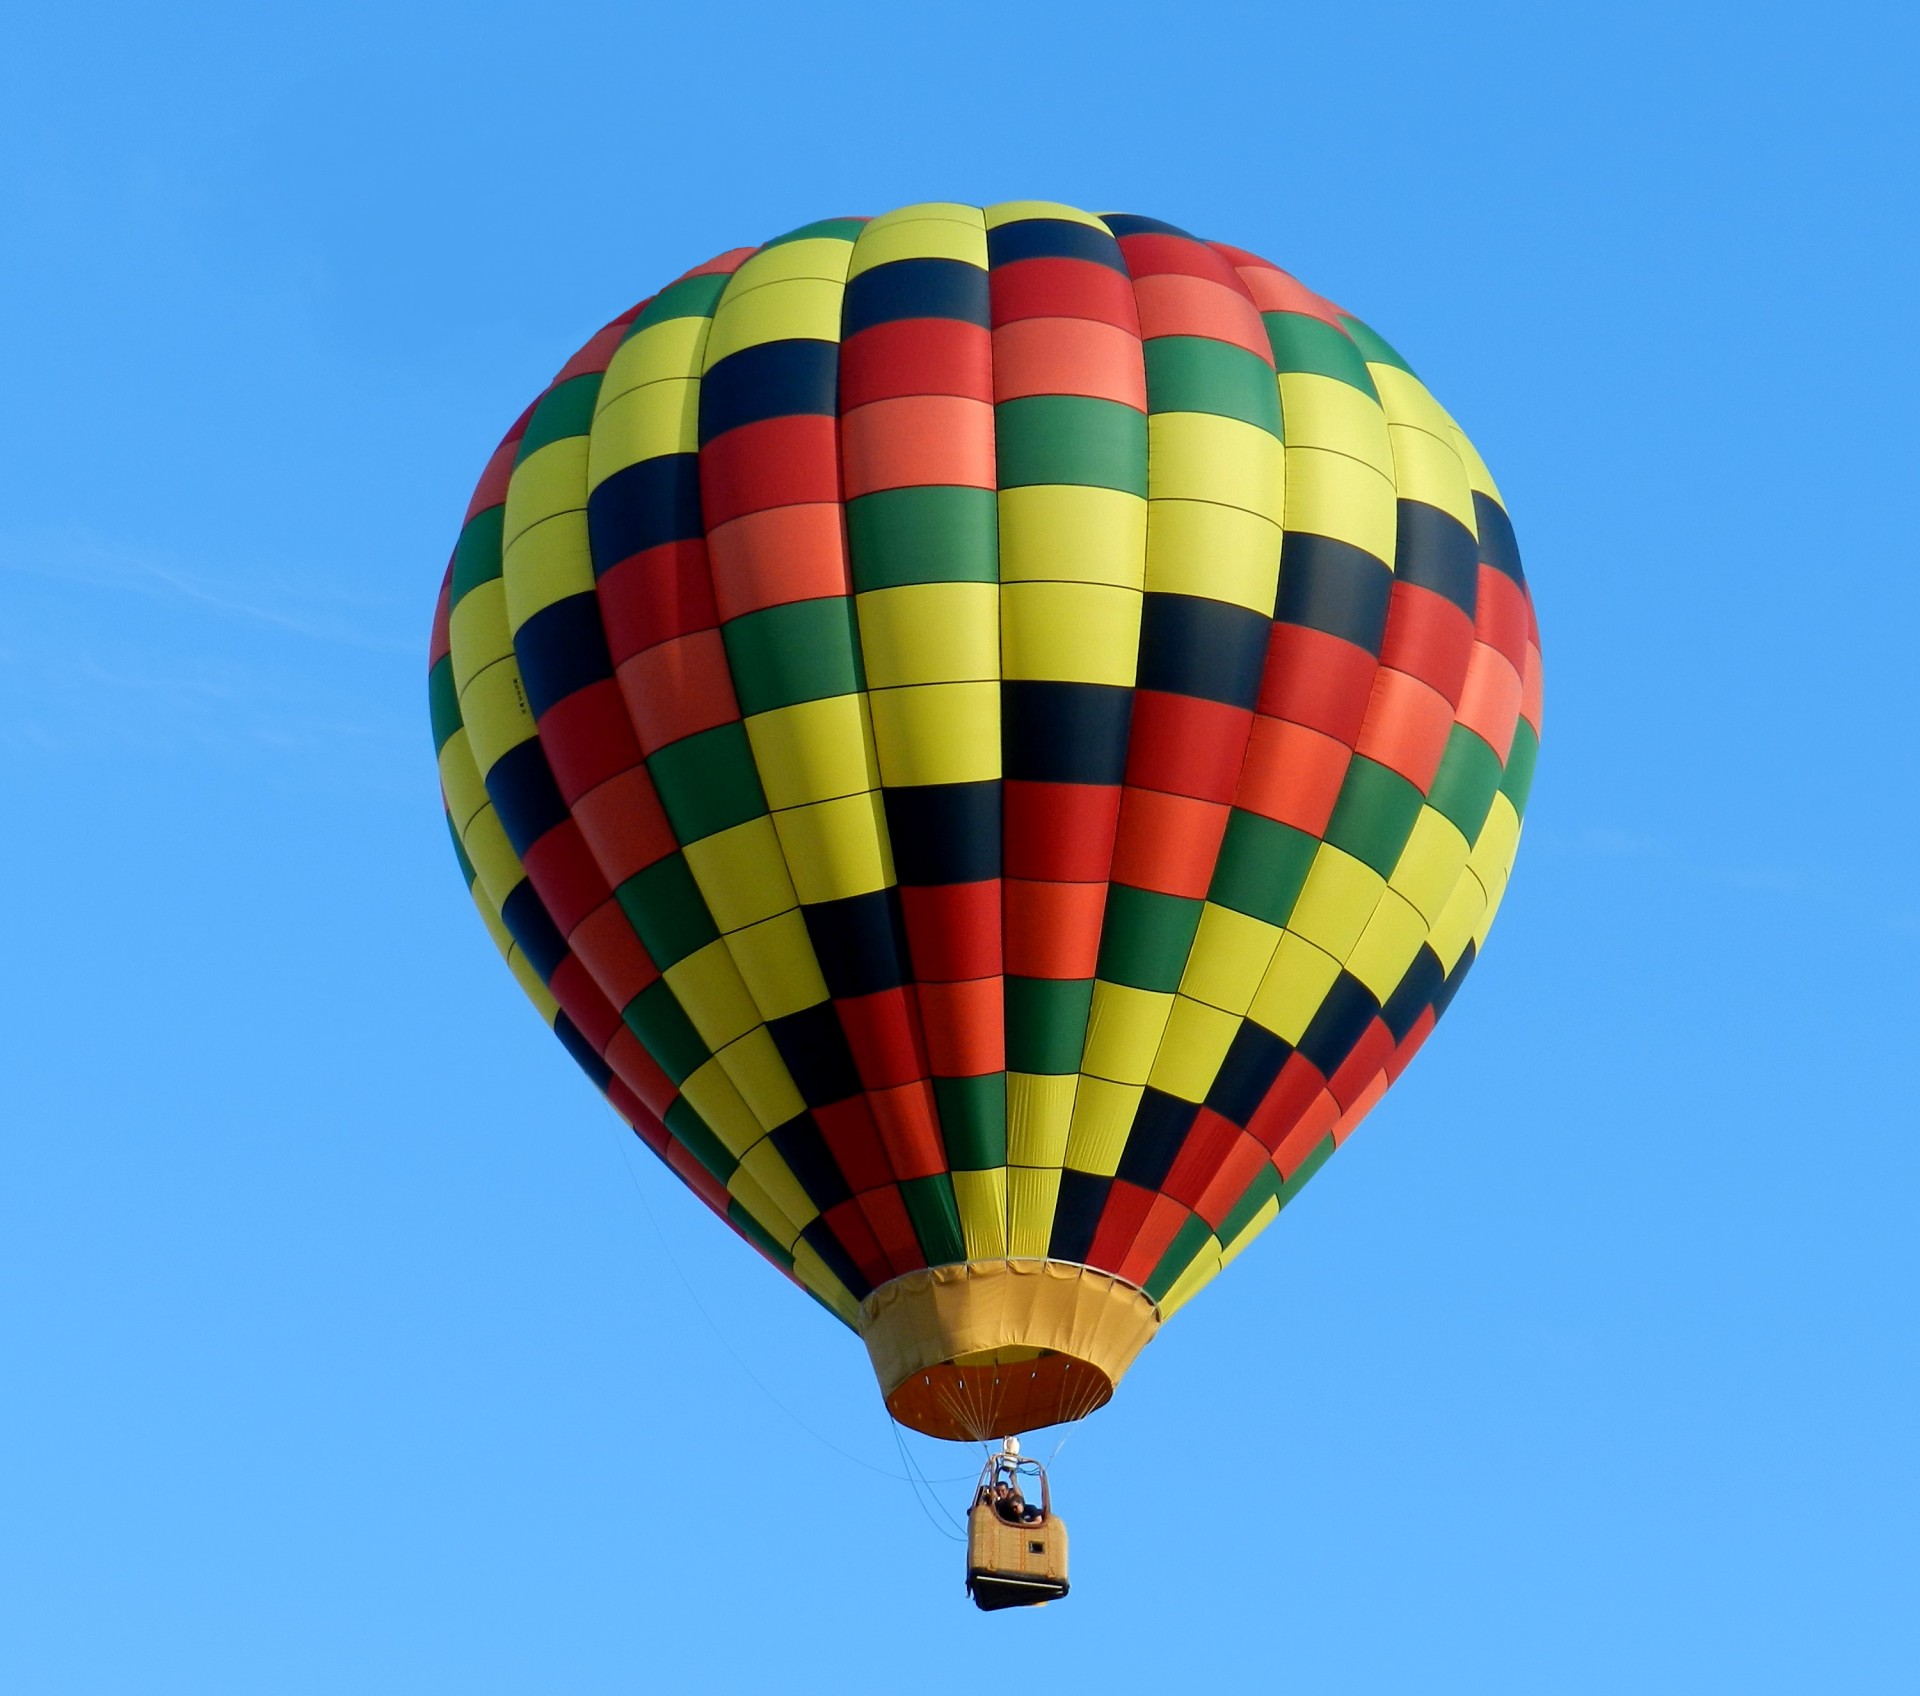 Hot air balloon at a festival in St-Jean-sur-Richelieu, Quebec